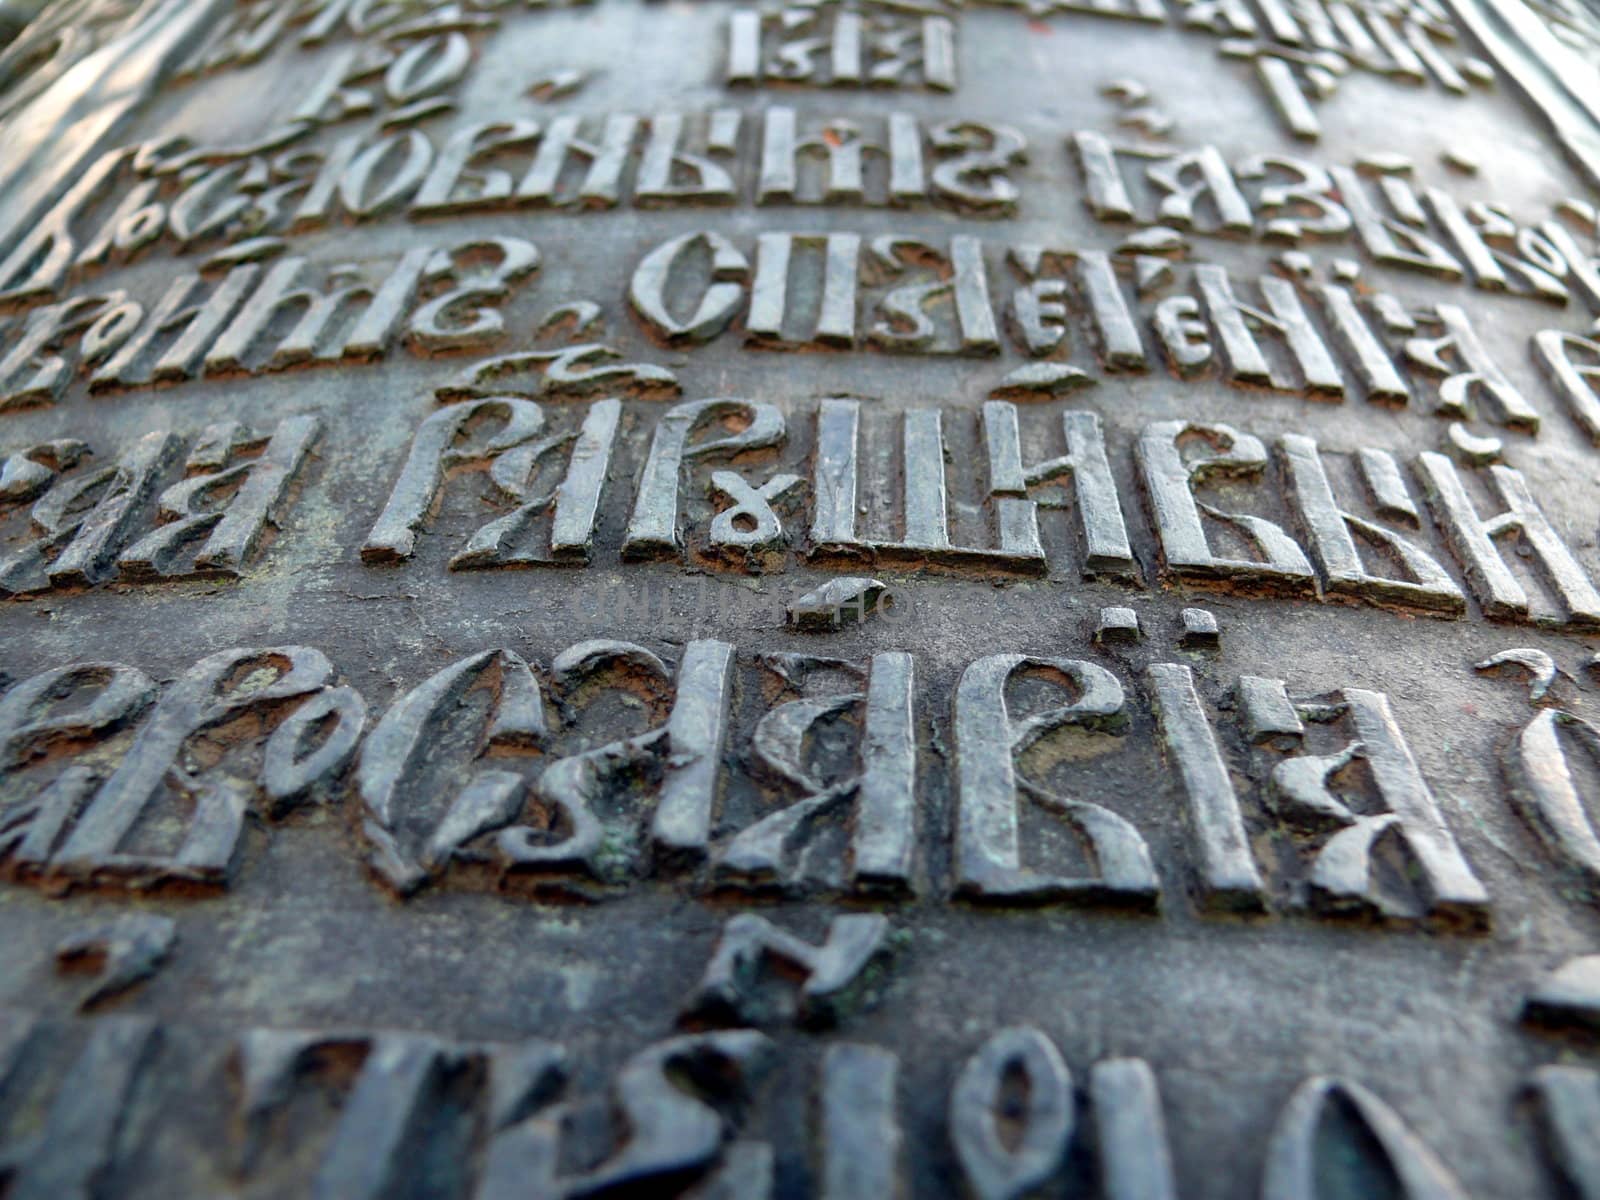 Scriptures in cyrillic alphabet by Stoyanov